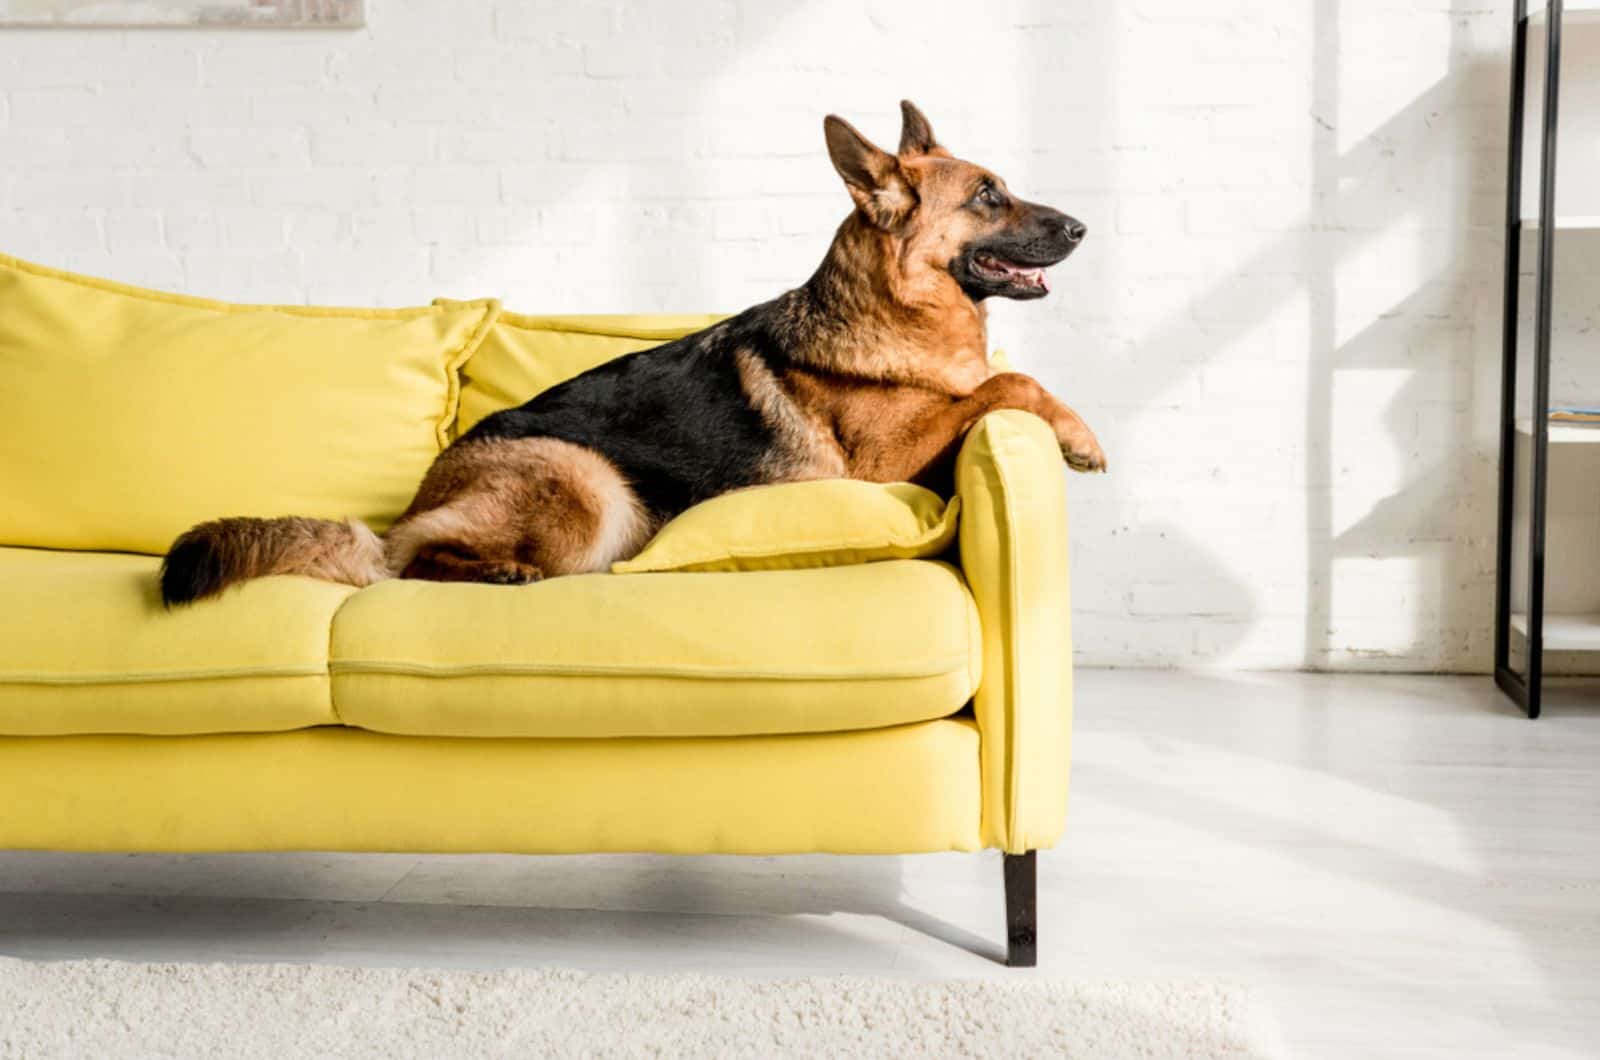 german shepherd lying on a yellow sofa in apartment